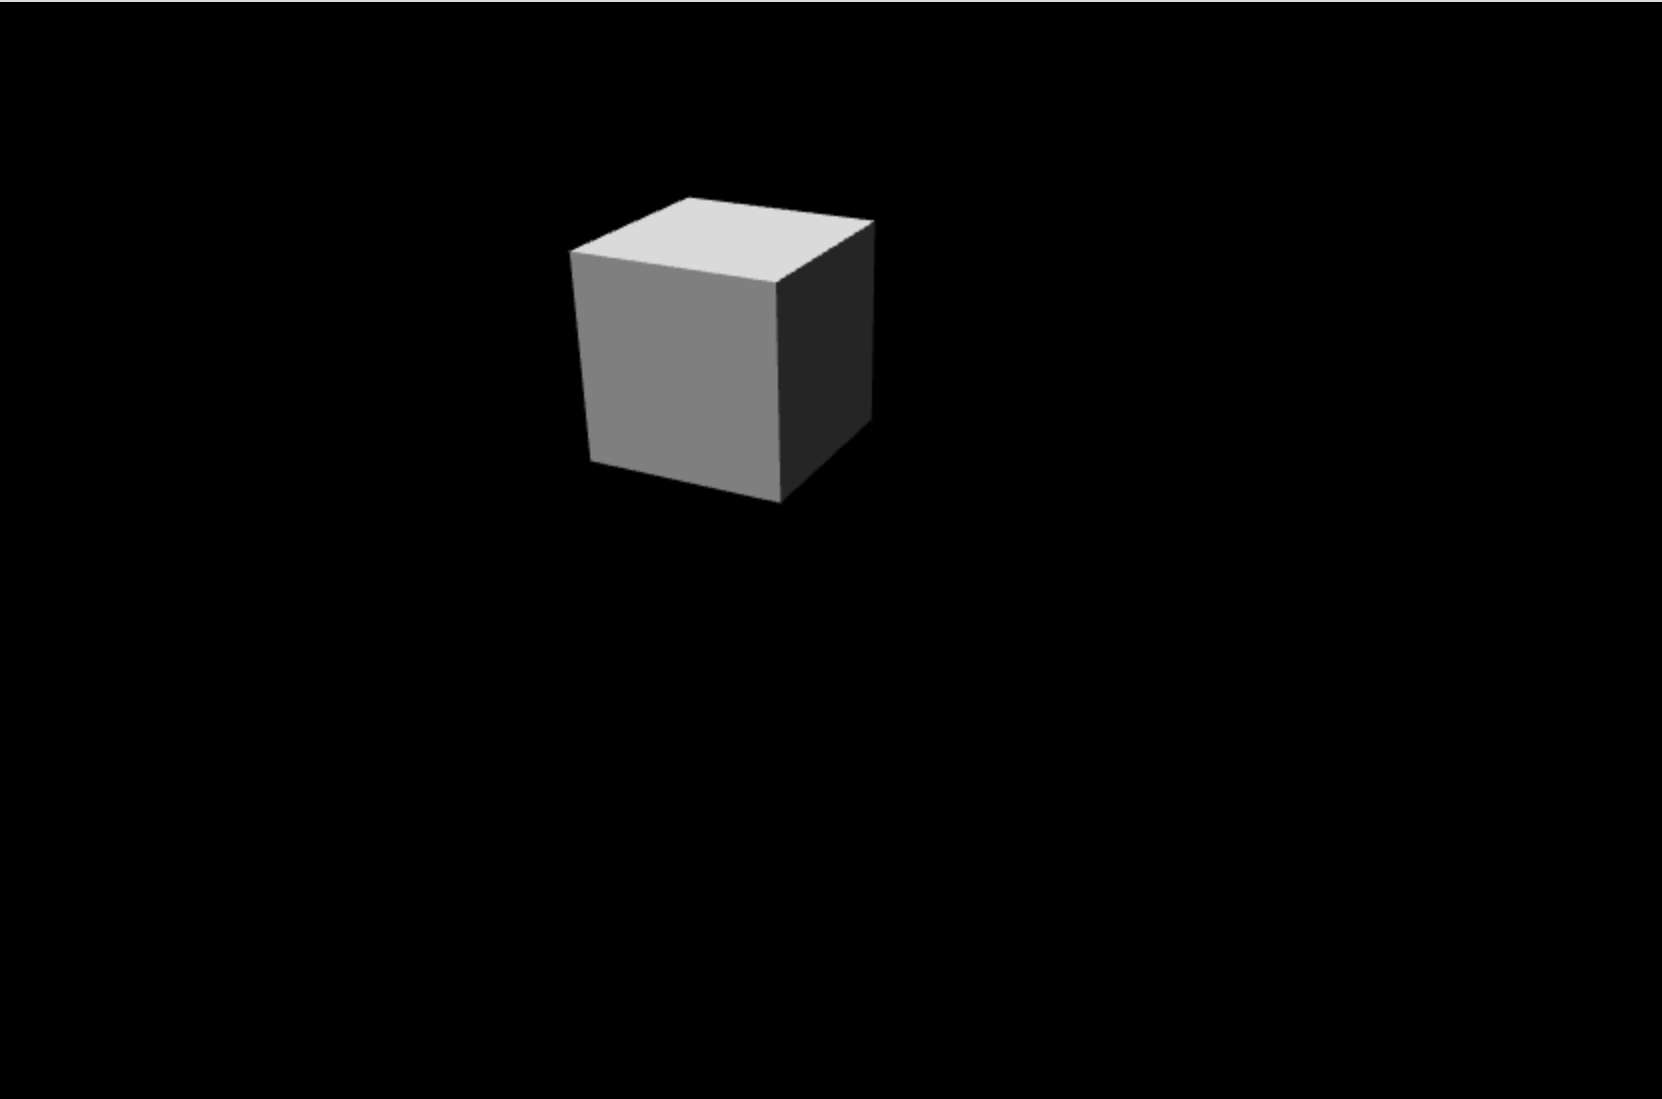 Basic scene with cube